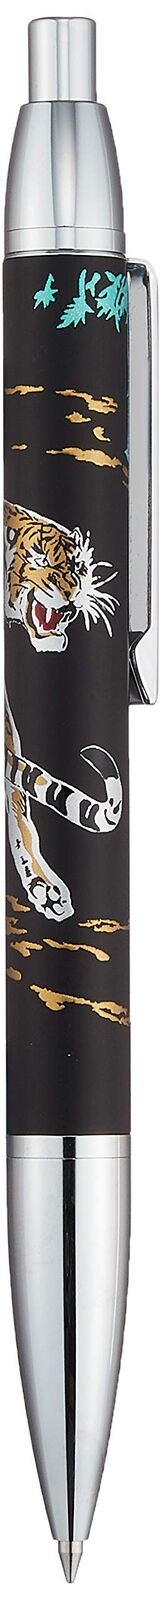 Sailor Pen oil-based ballpoint pen Yubi Maki-e Shikami White Tiger Black 16-0374